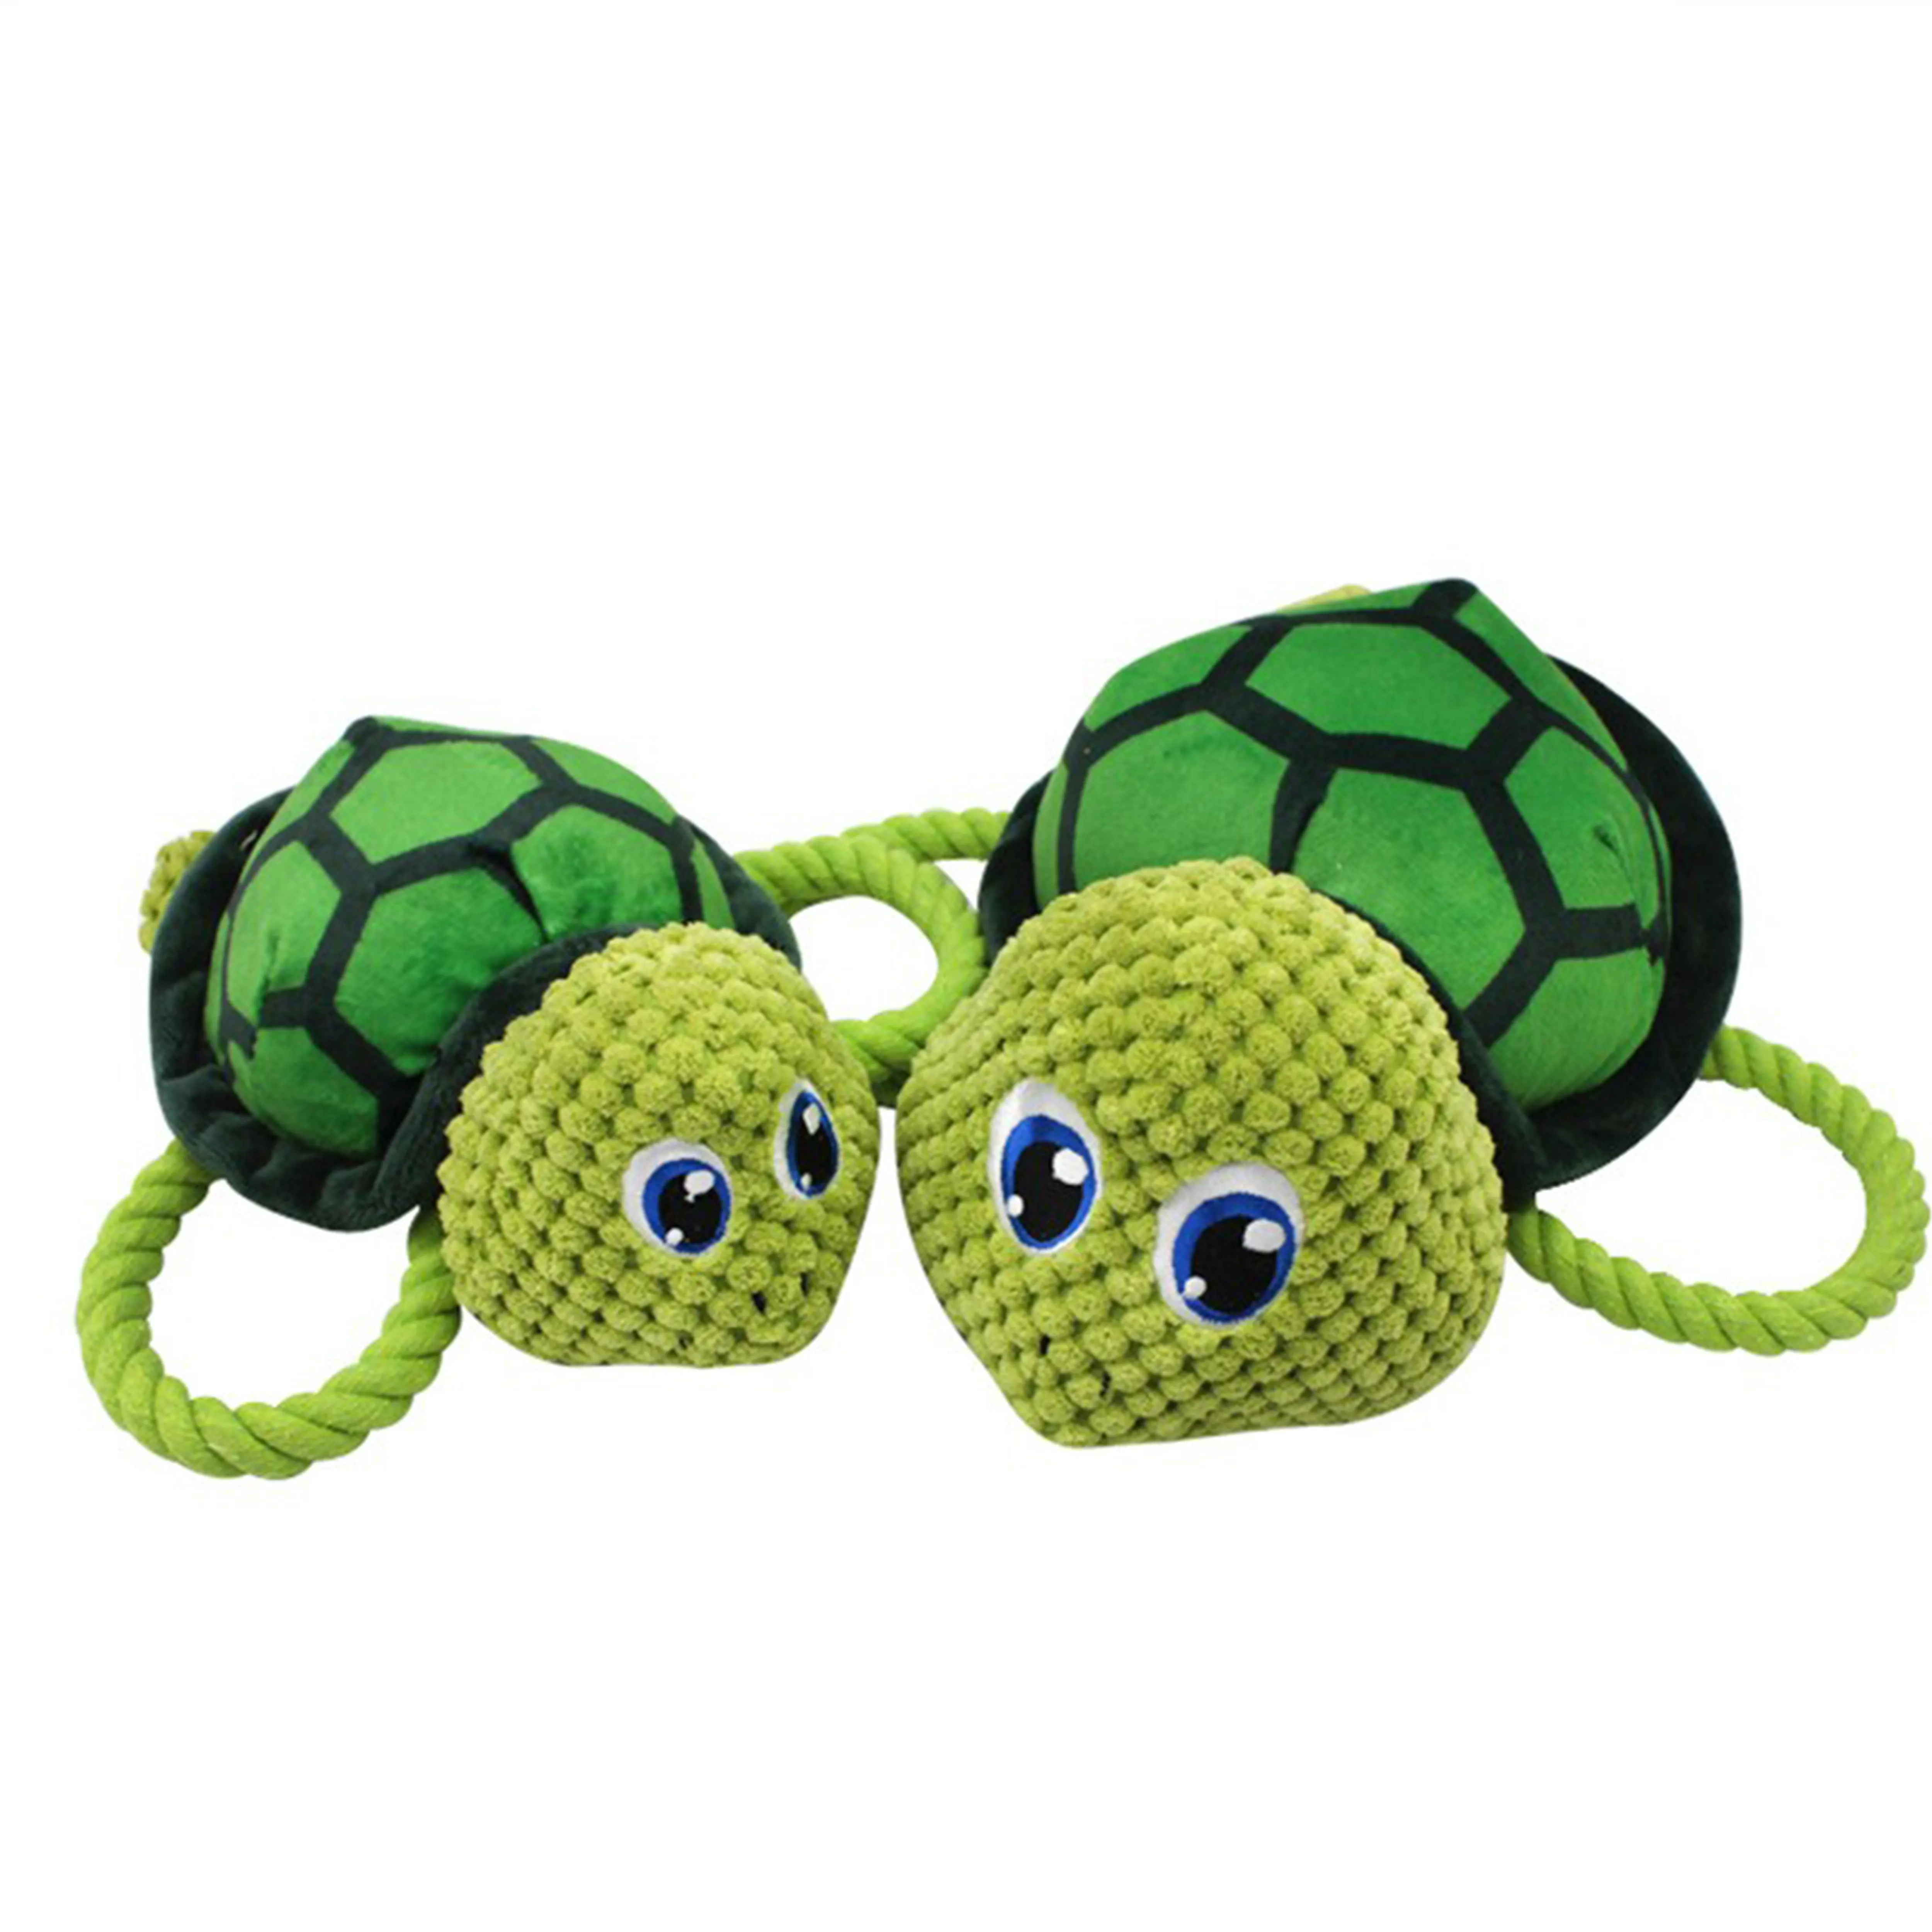 Interactive green cotton down dog pet squeak toys pet accessories